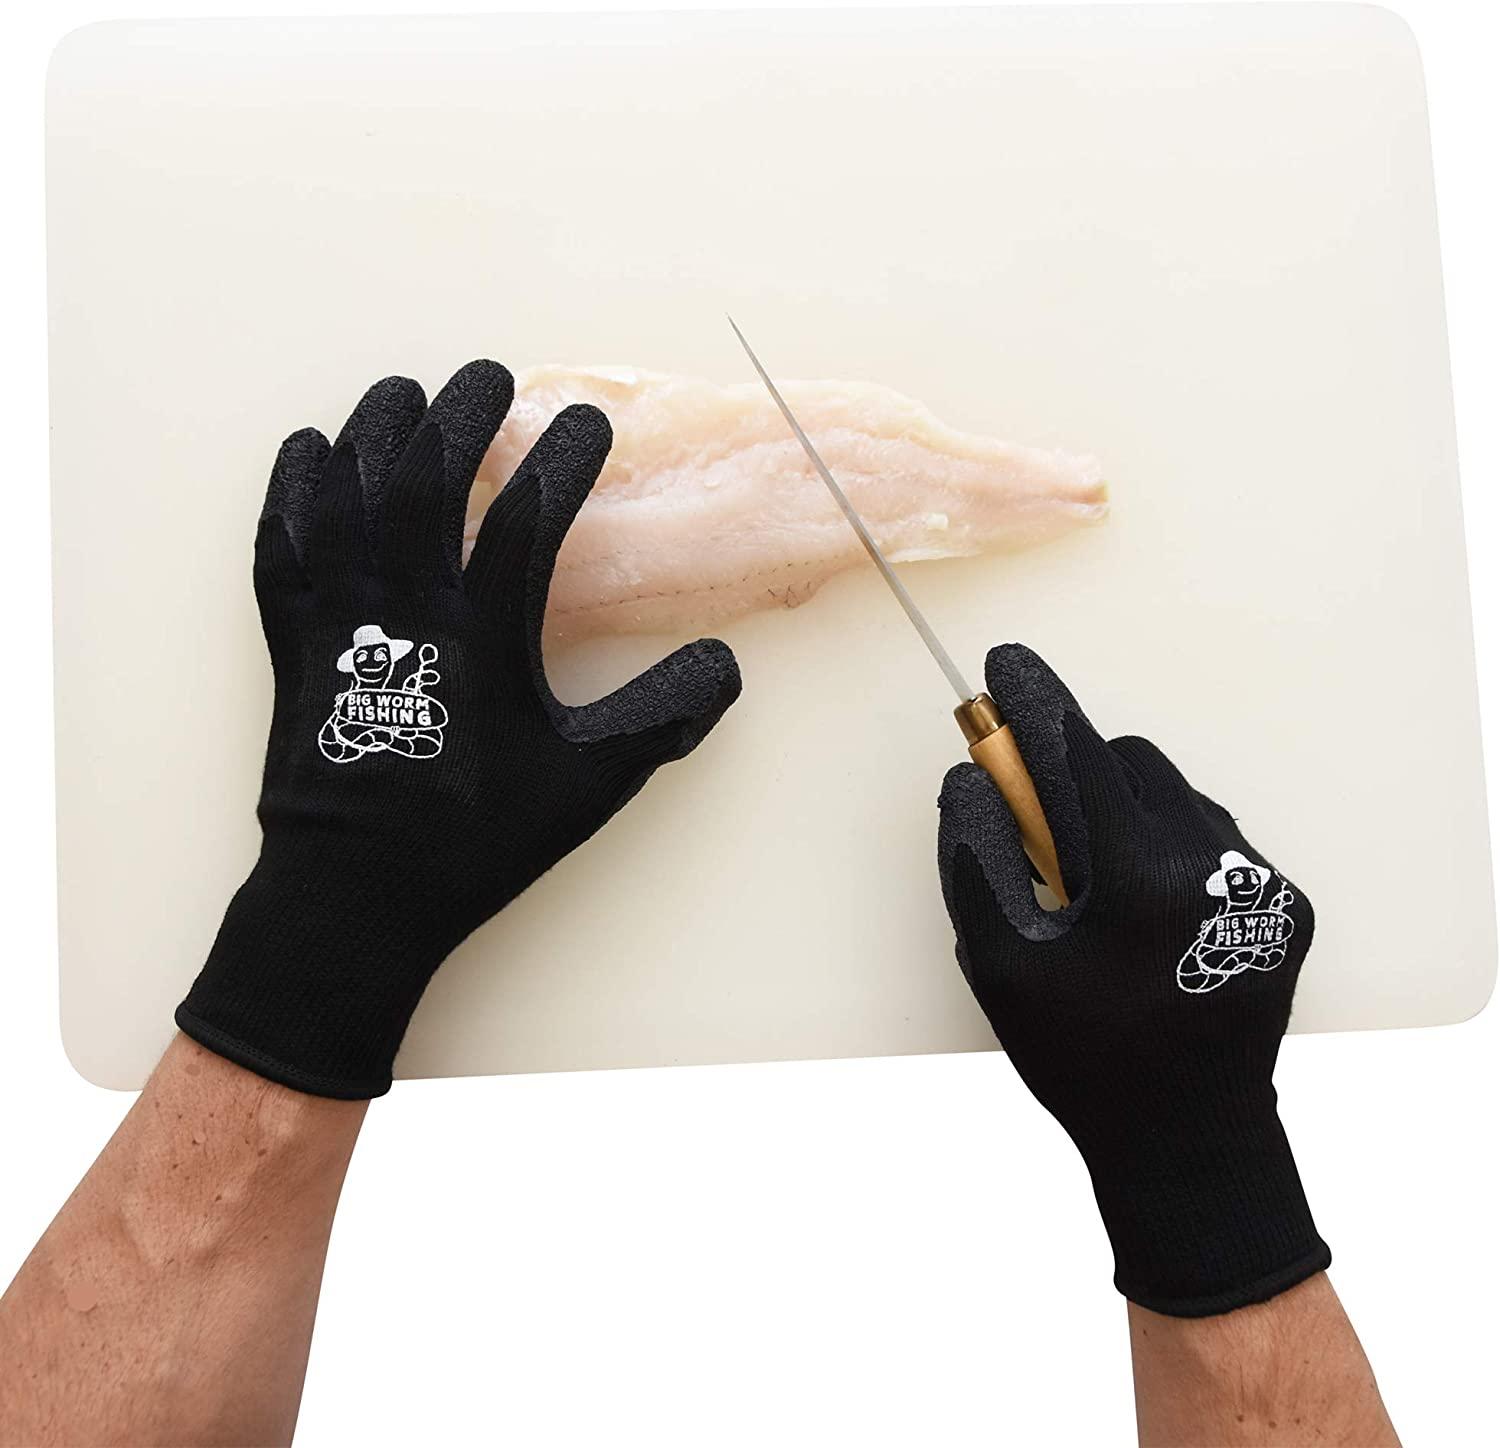 Fishing Gloves – Fish Handling Gloves for Fishing – Textured Grip